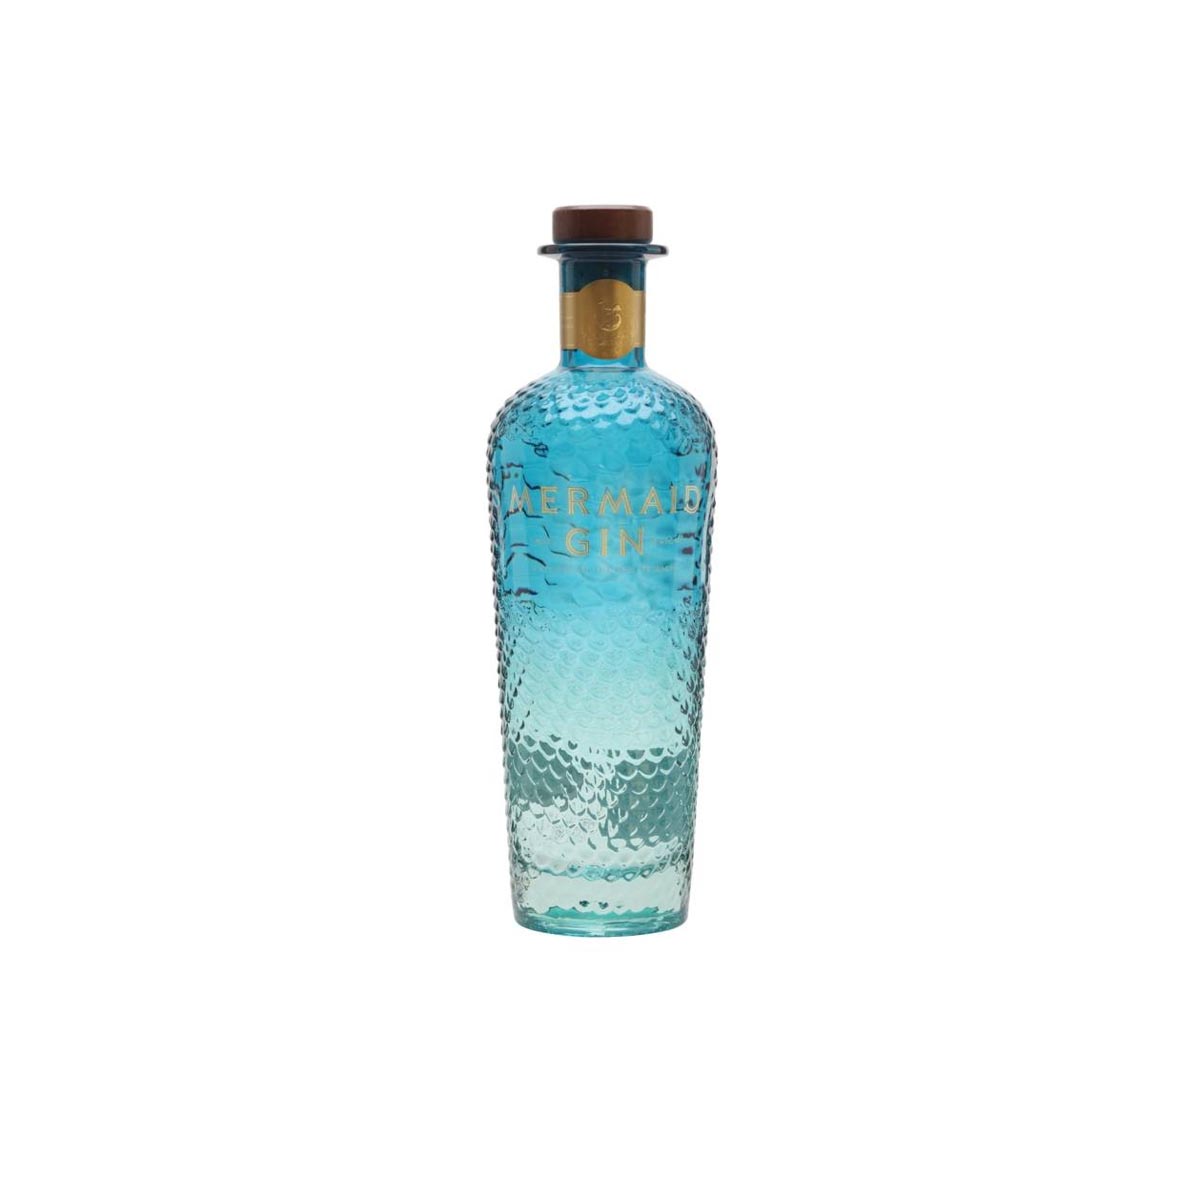 Mermaid Gin (0,7l; 42%) - Mixery